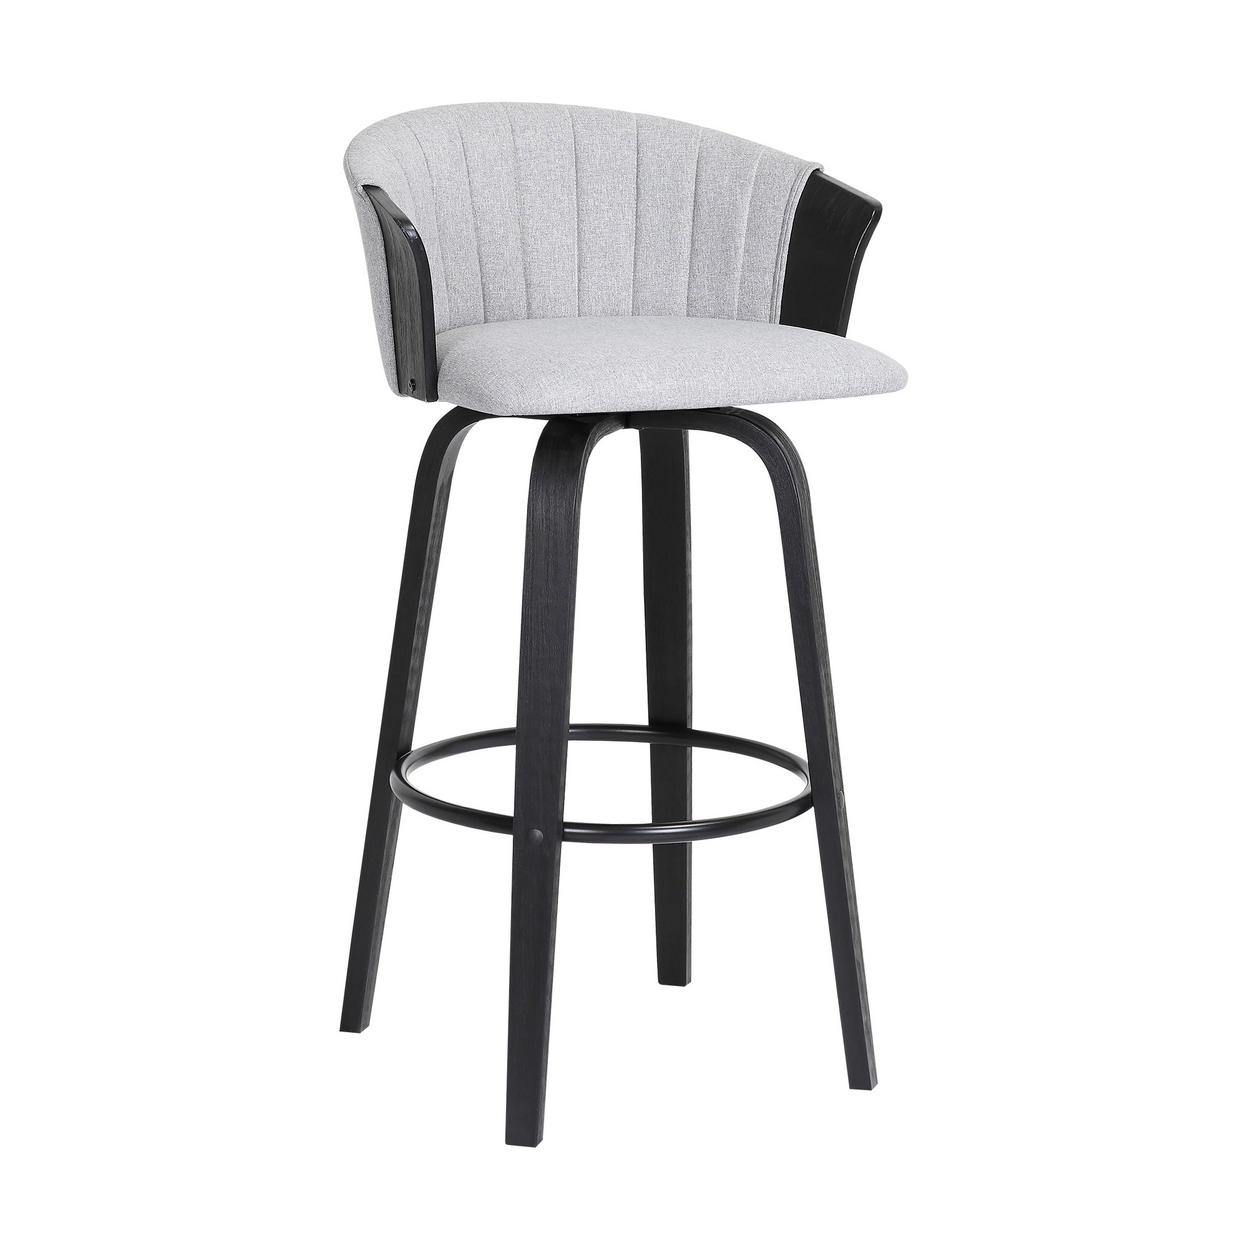 Oja 26 Inch Swivel Counter Stool Chair, Light Gray Fabric, Curved, Black - Saltoro Sherpi